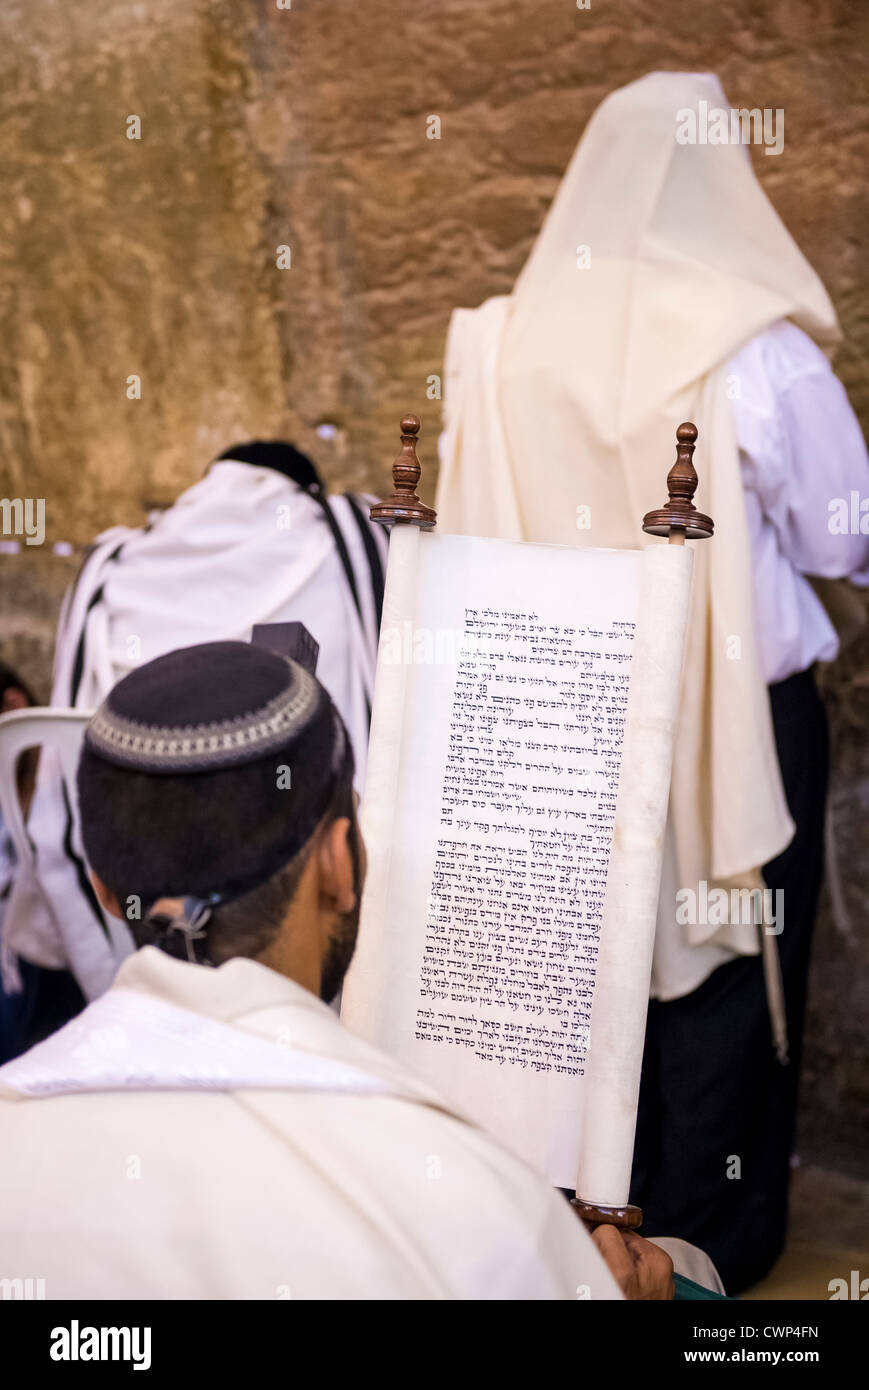 Jewish man prays in the Wailing wall during the Jewish holiday of Tisha B'av Stock Photo